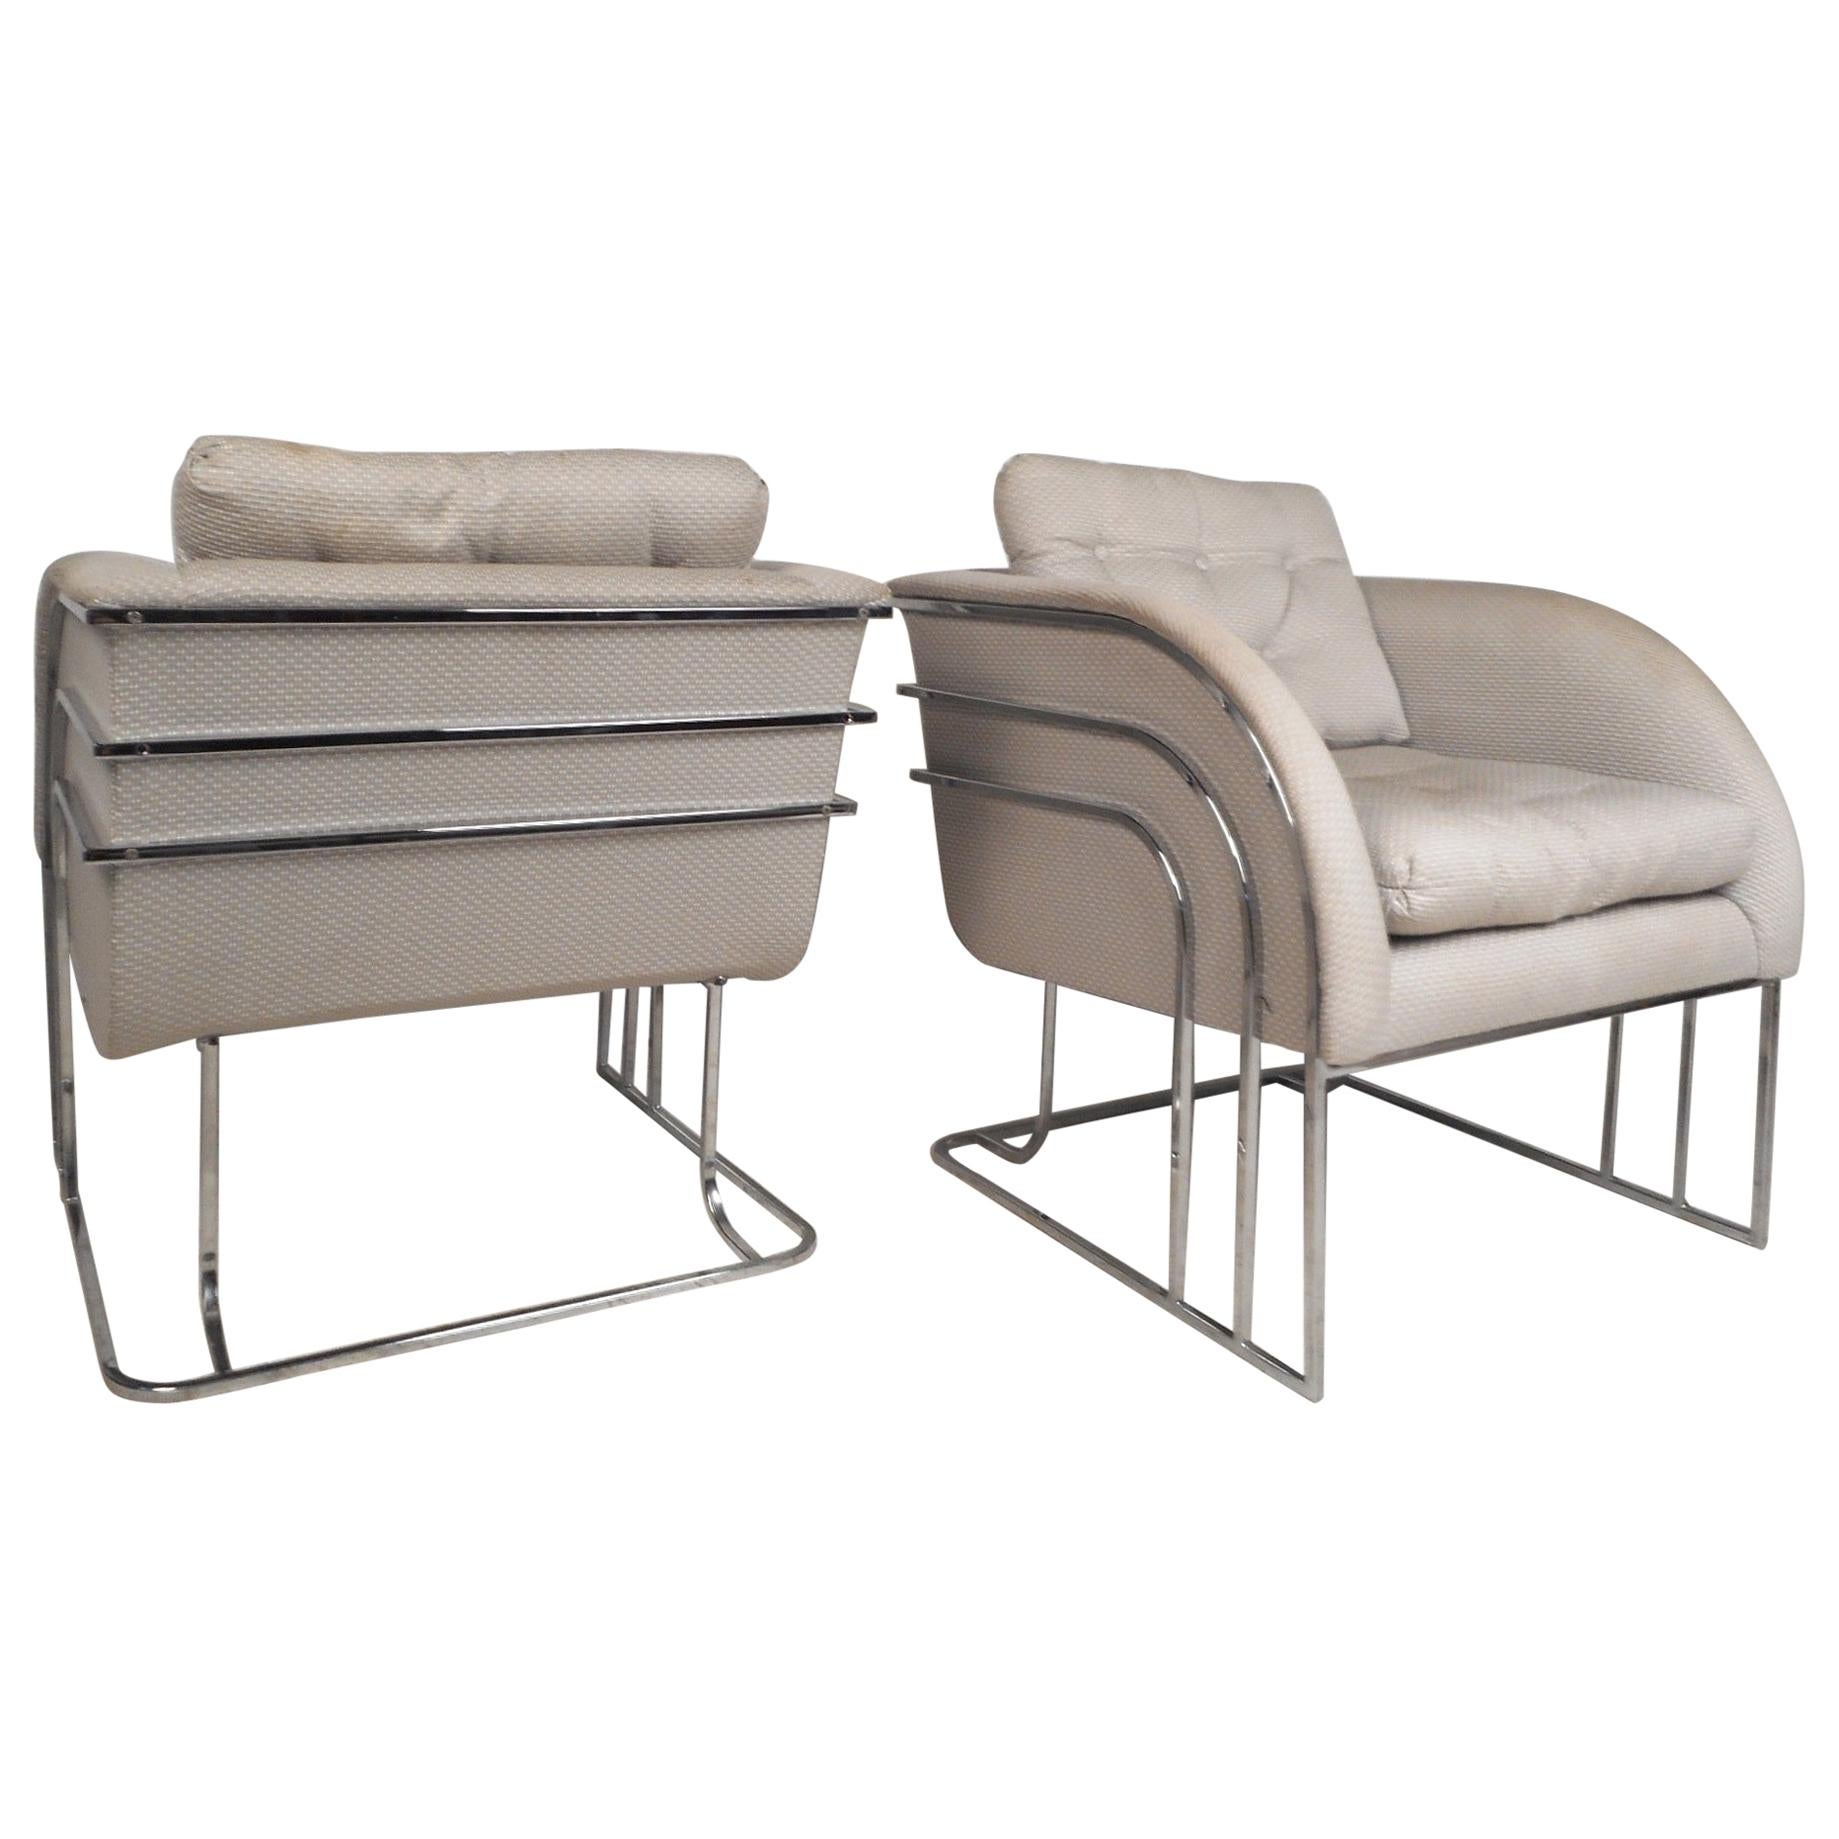 Pair of Midcentury Milo Baughman Lounge Chairs